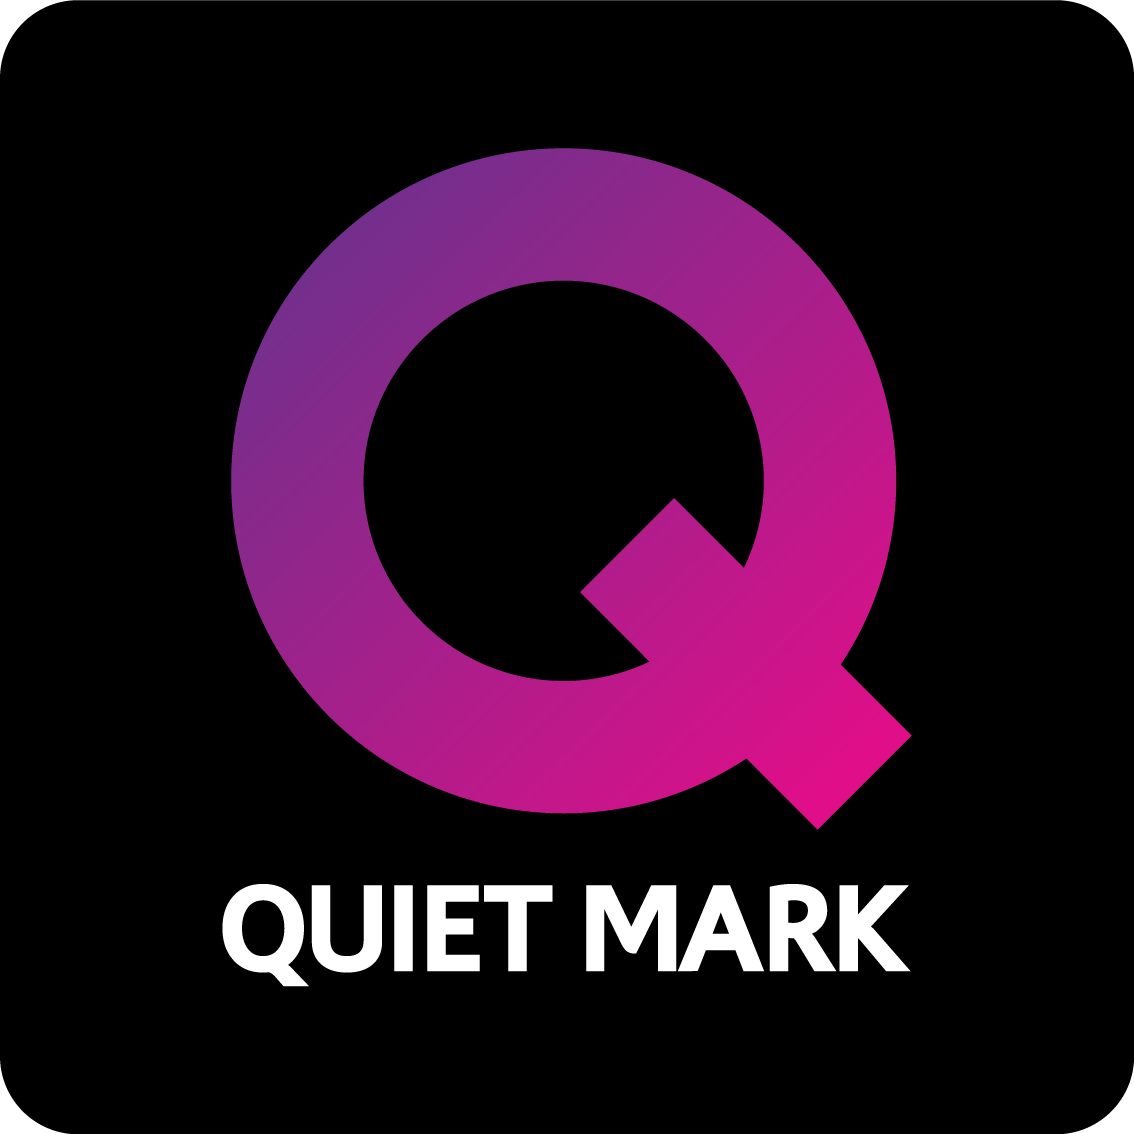 Quiet quality